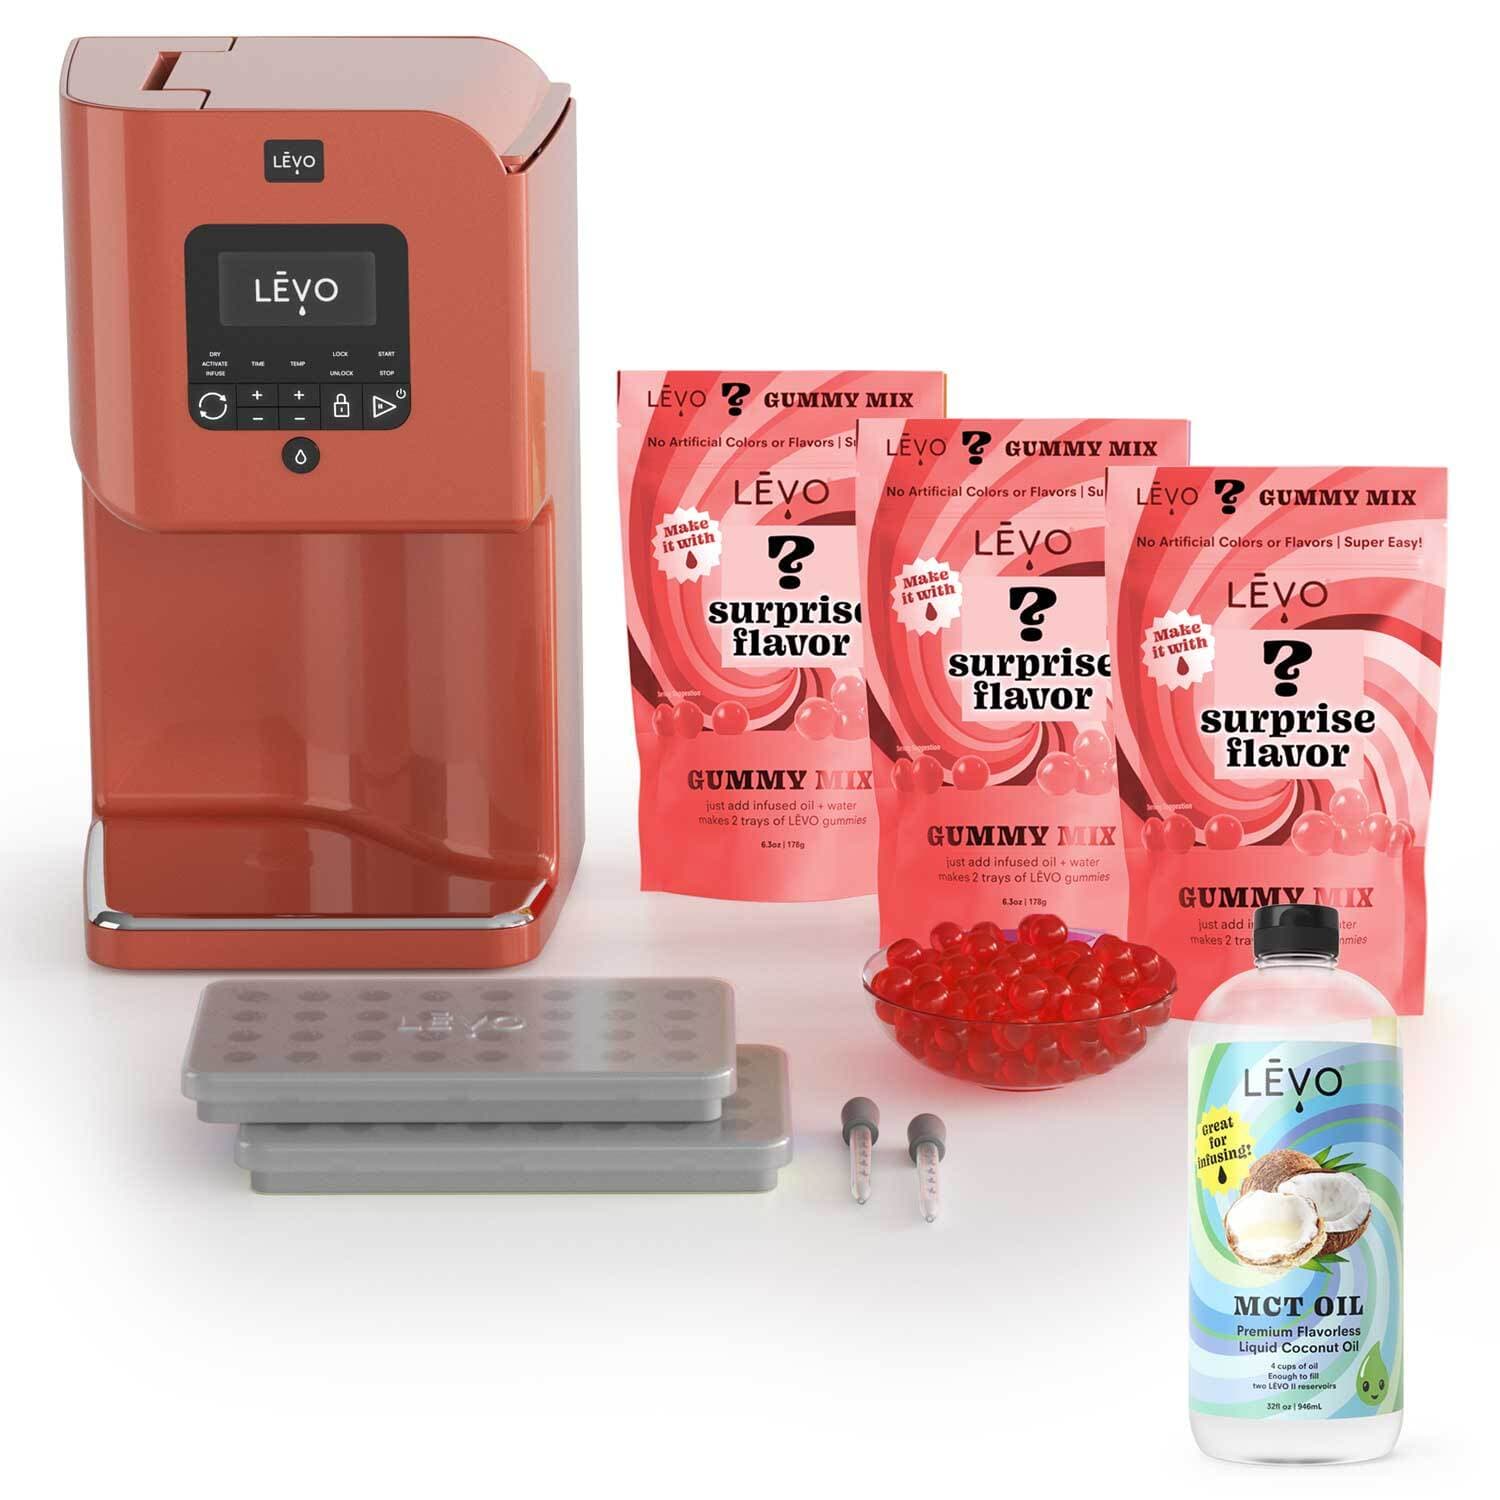 LEVO gummy making kit with 3 gummy mix packs, MCT Oil, Gummy Molds, and LEVO II machine.